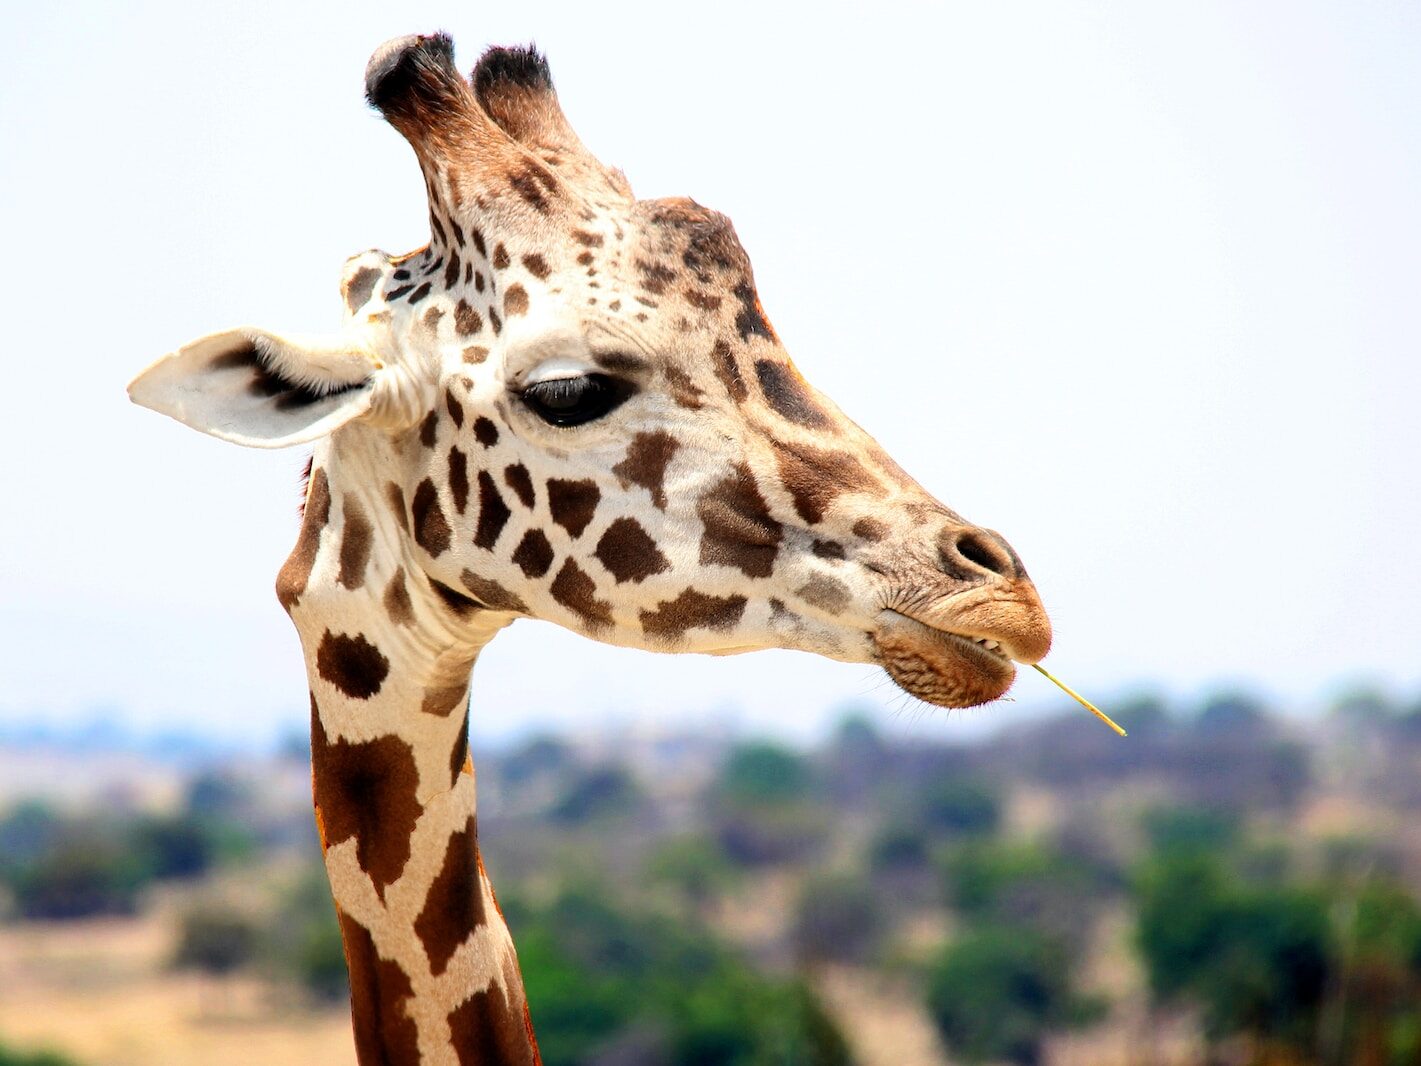 giraffe eating during daytime